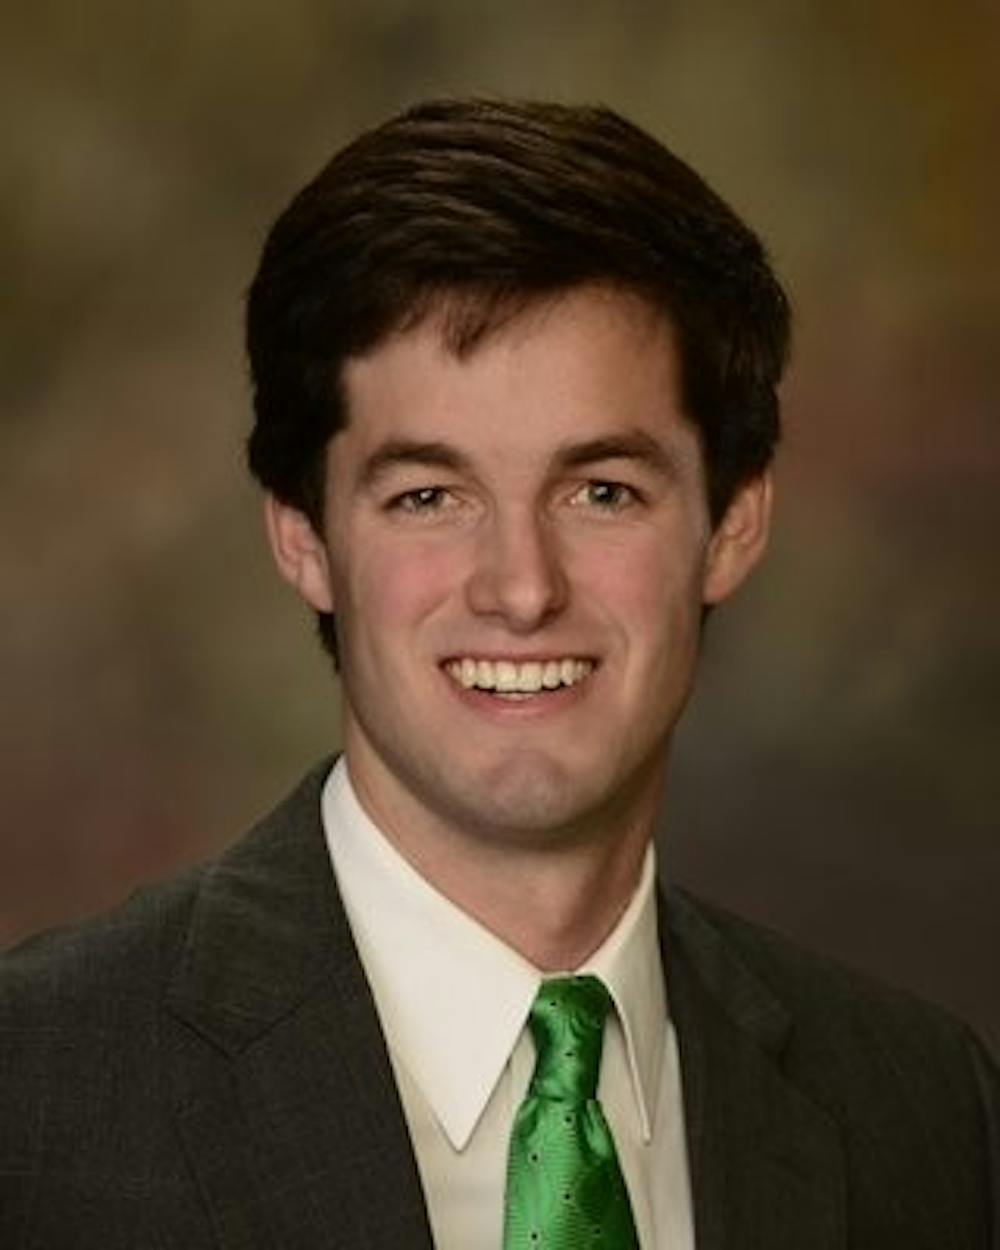 Logan Powell, junior in political science